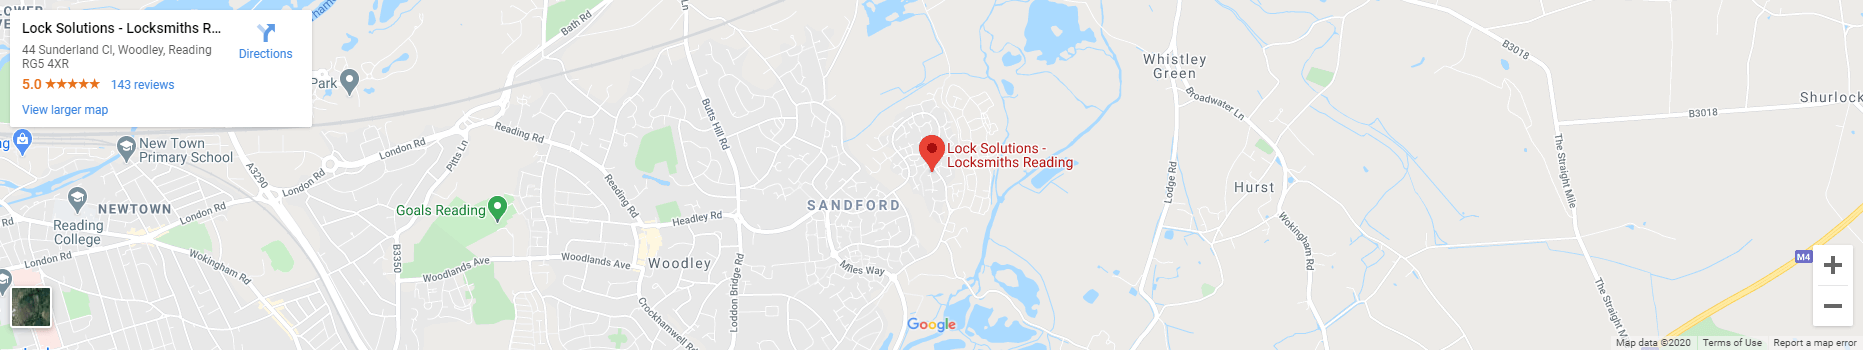 Lock Solutions on Google Maps